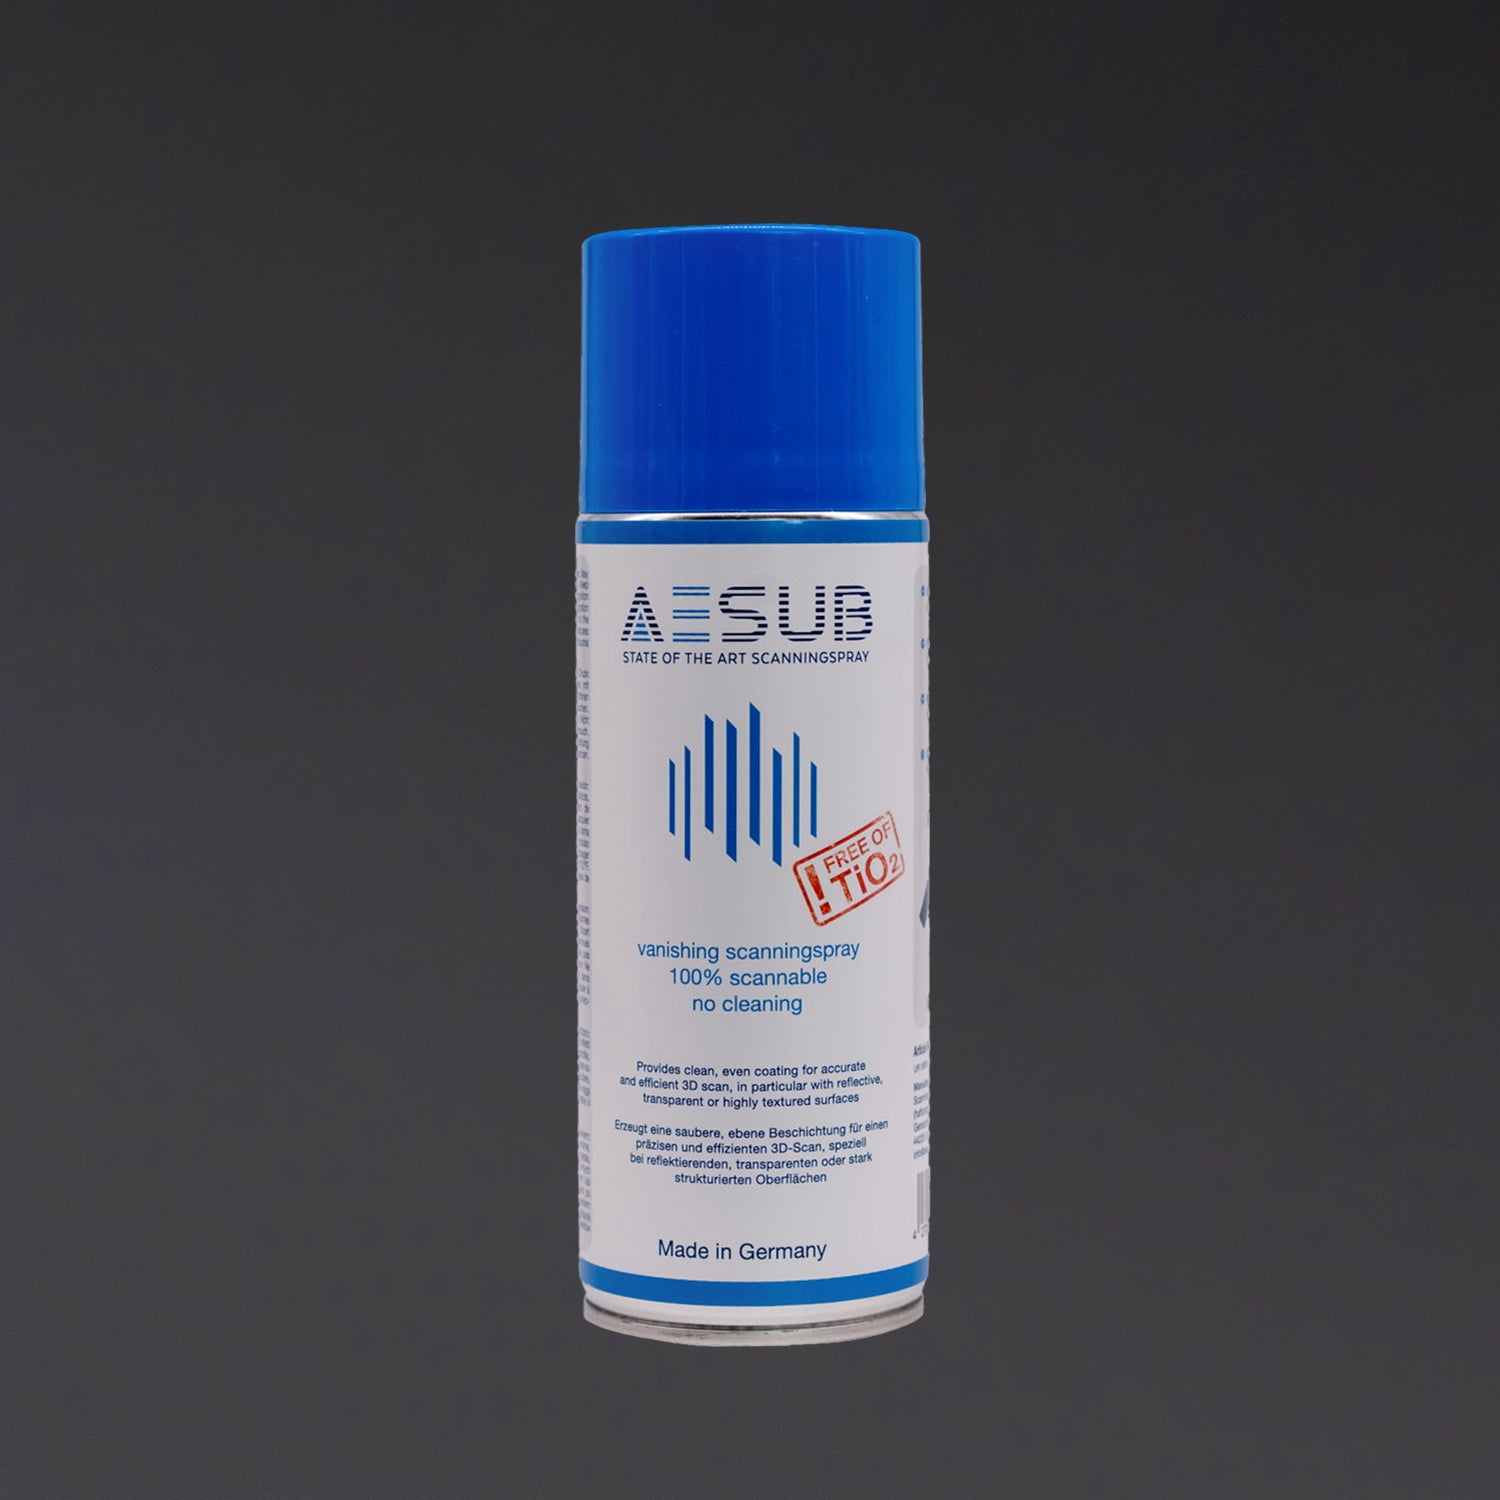 AESUB Blue vanishing scanning spray, accessory for EINSTAR 3D scanner.